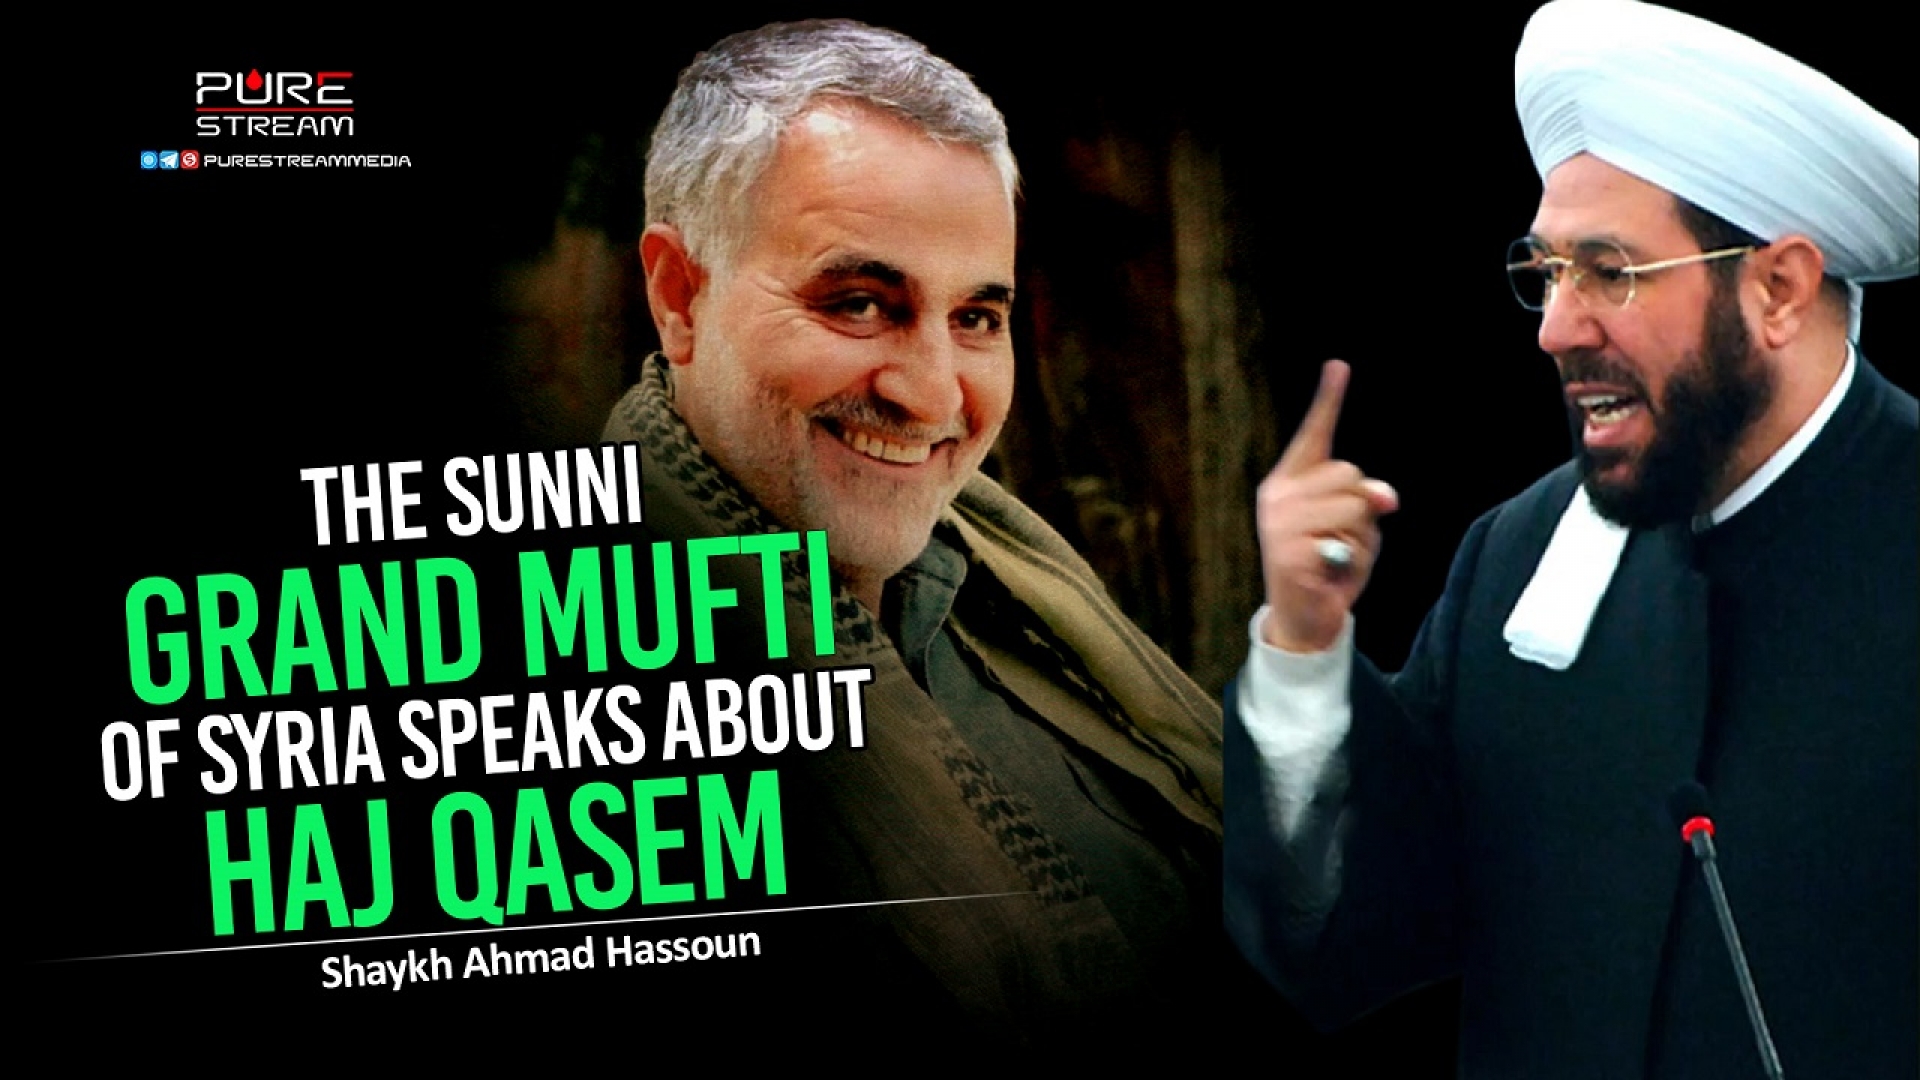 The Sunni Grand Mufti of Syria Speaks About Haj Qasem | Shaykh Ahmad Hassoun | Arabic Sub English